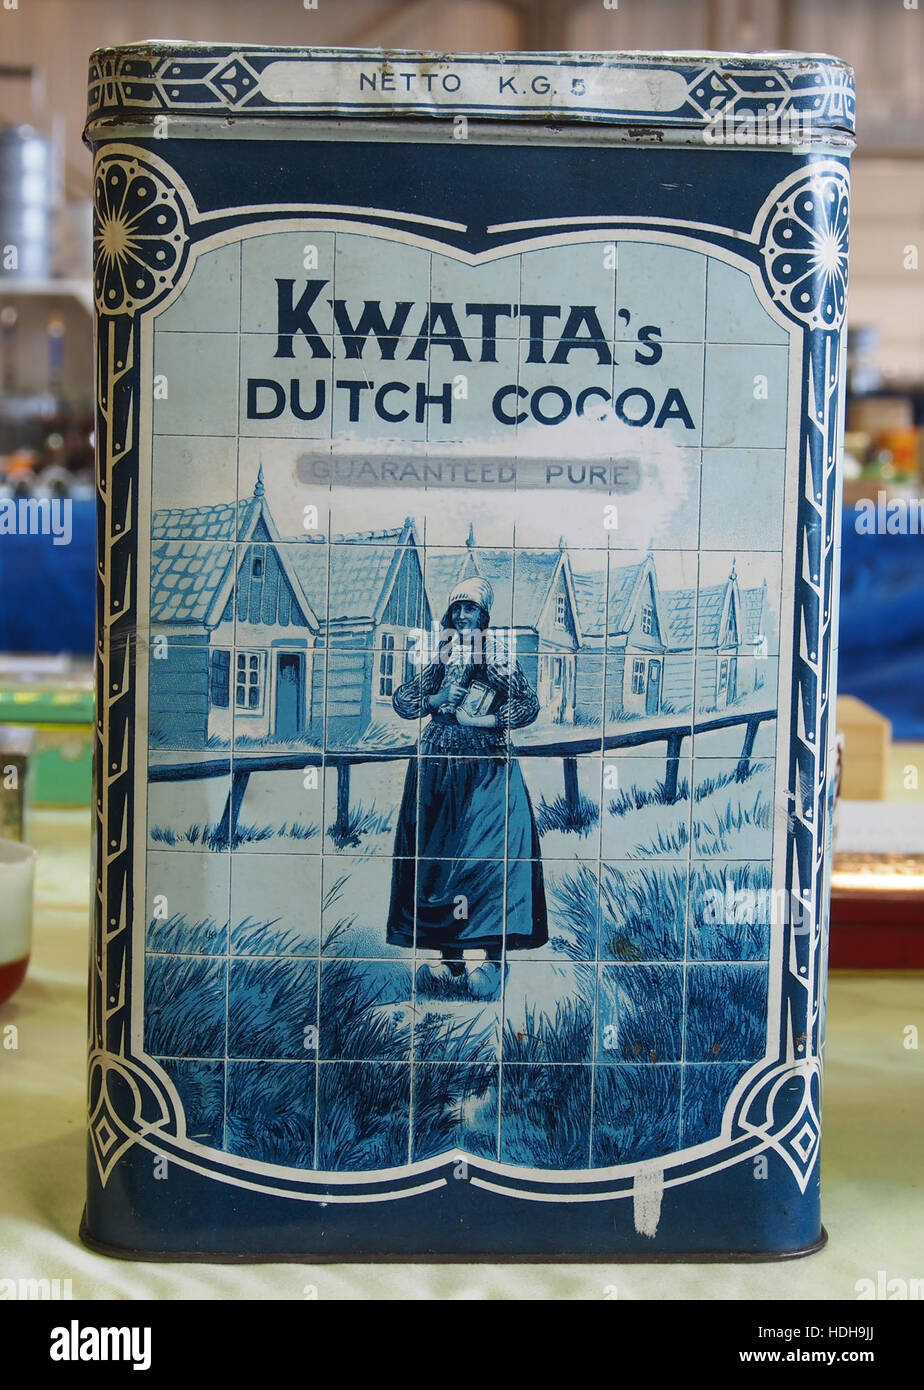 Kwattas dutch cocoa 5kg blik pic2 Stock Photo